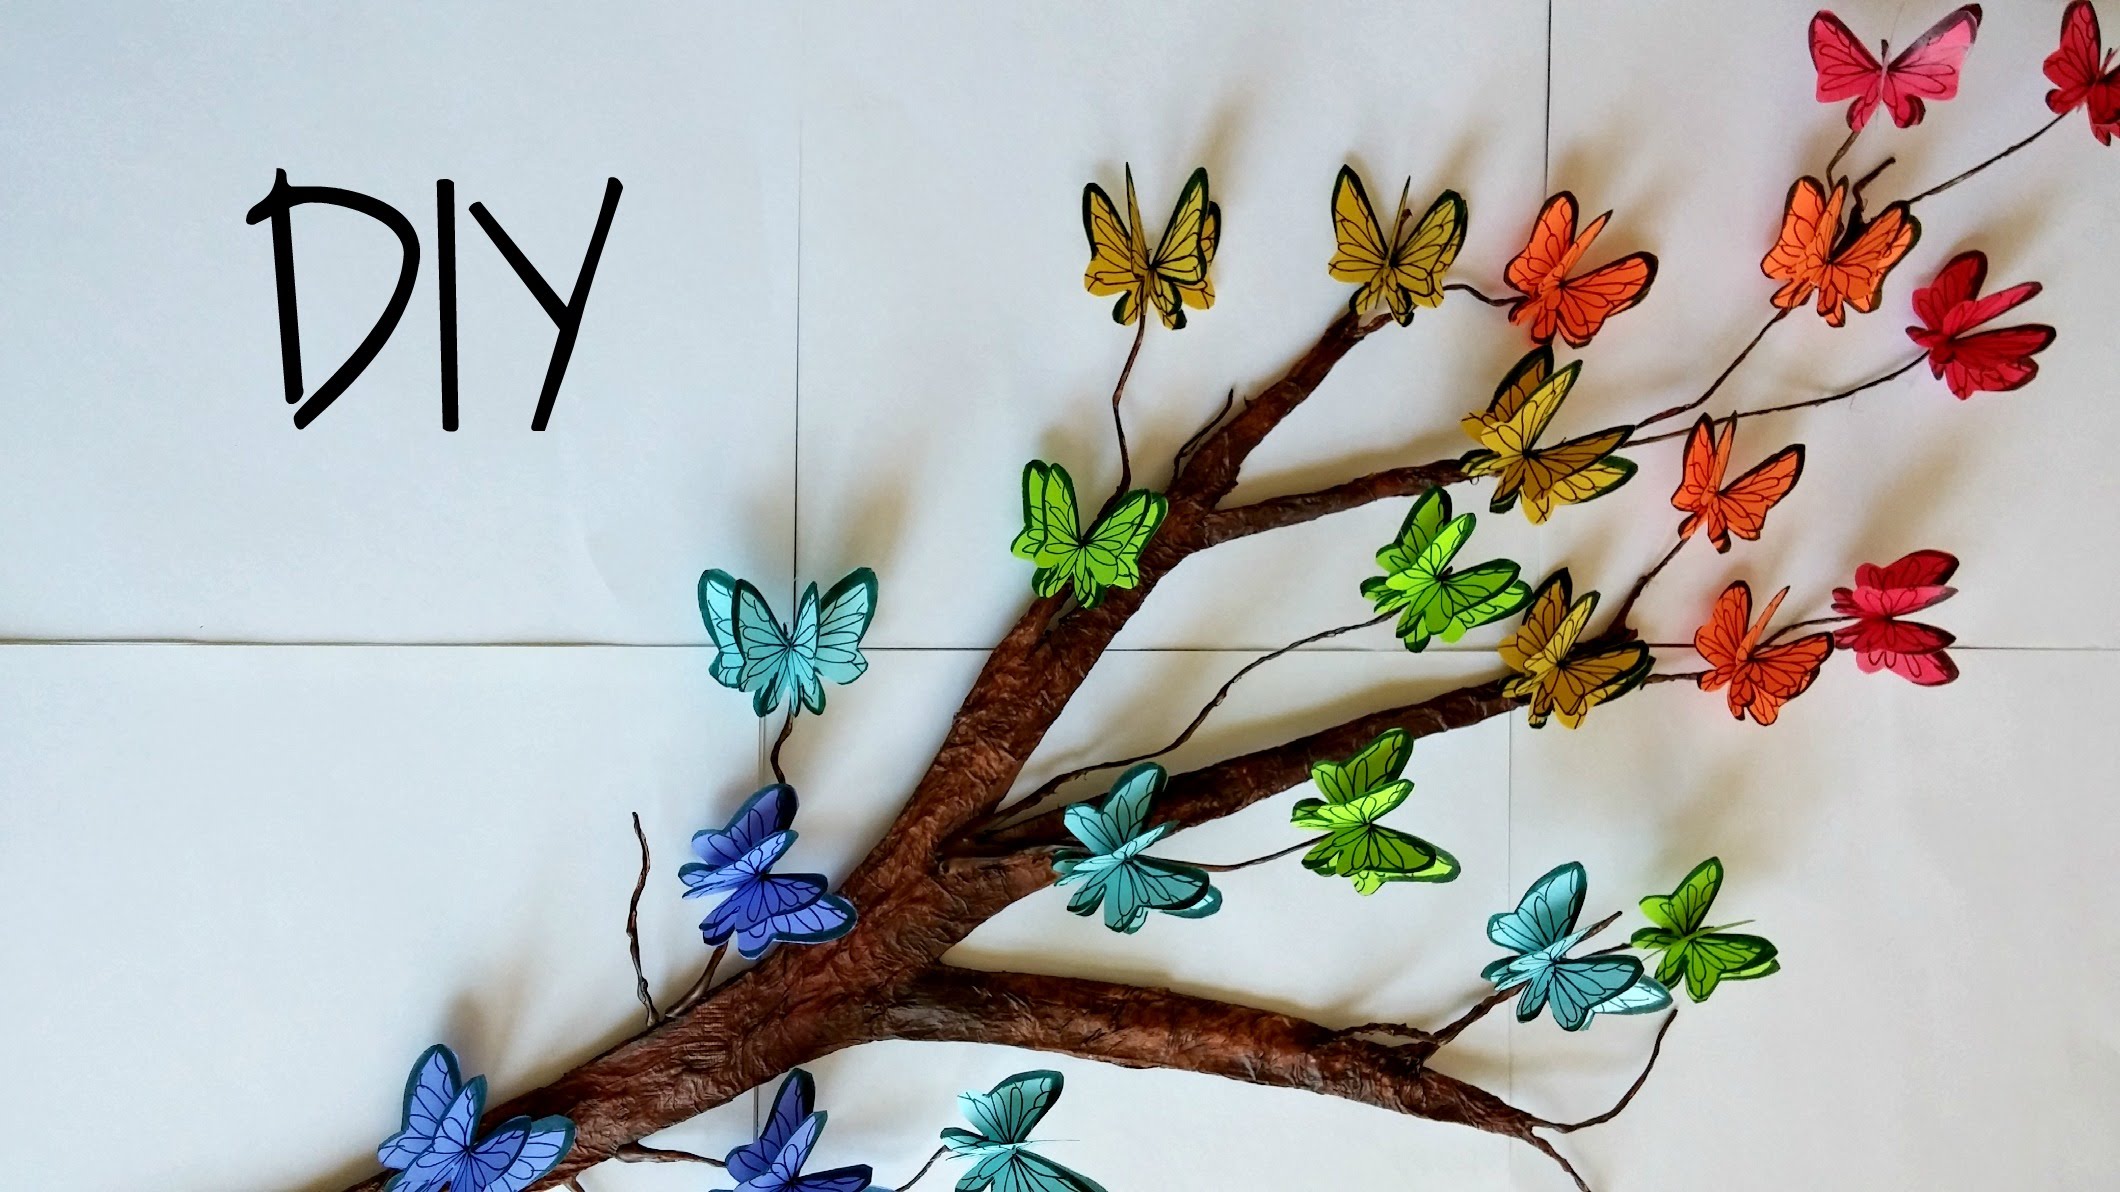 DIY Tree Branch + 3D Butterflies ♥ // Room Decor - YouTube